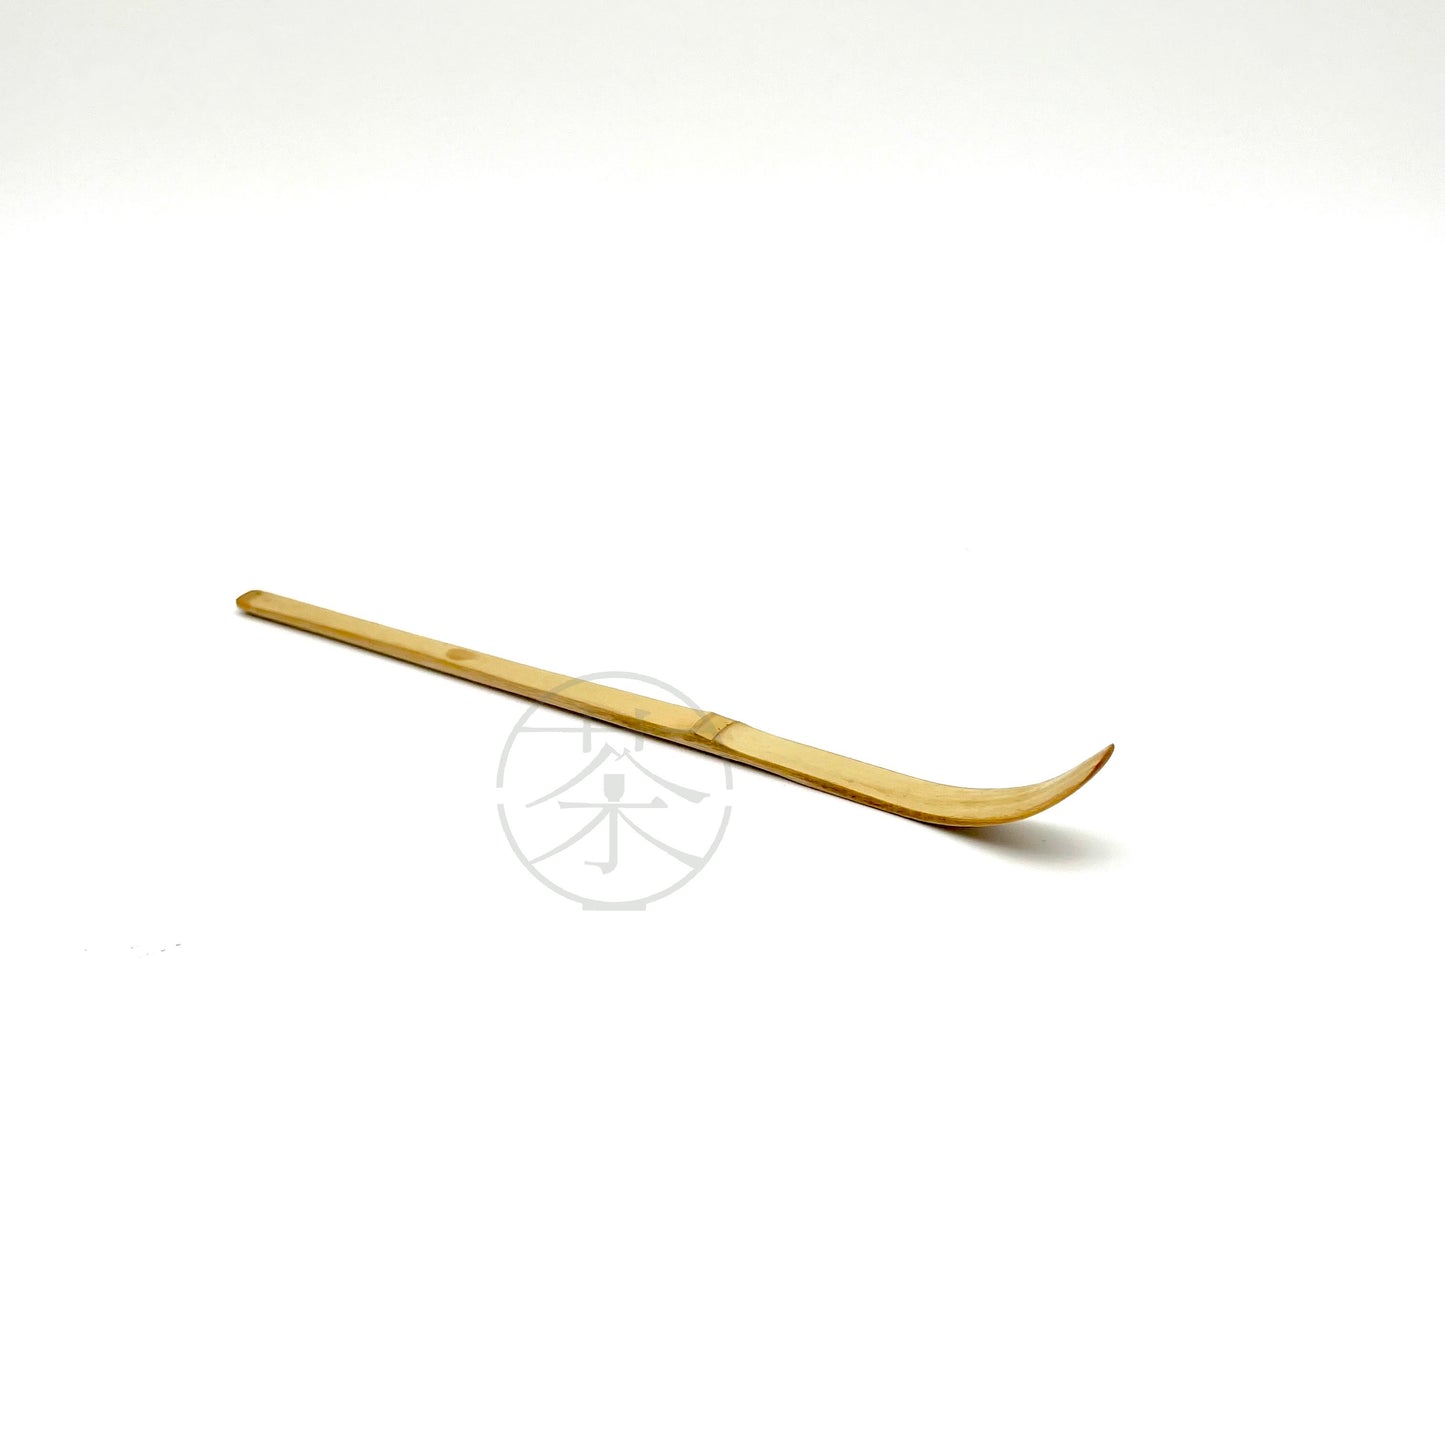 Chashaku / Bamboo tea spoon